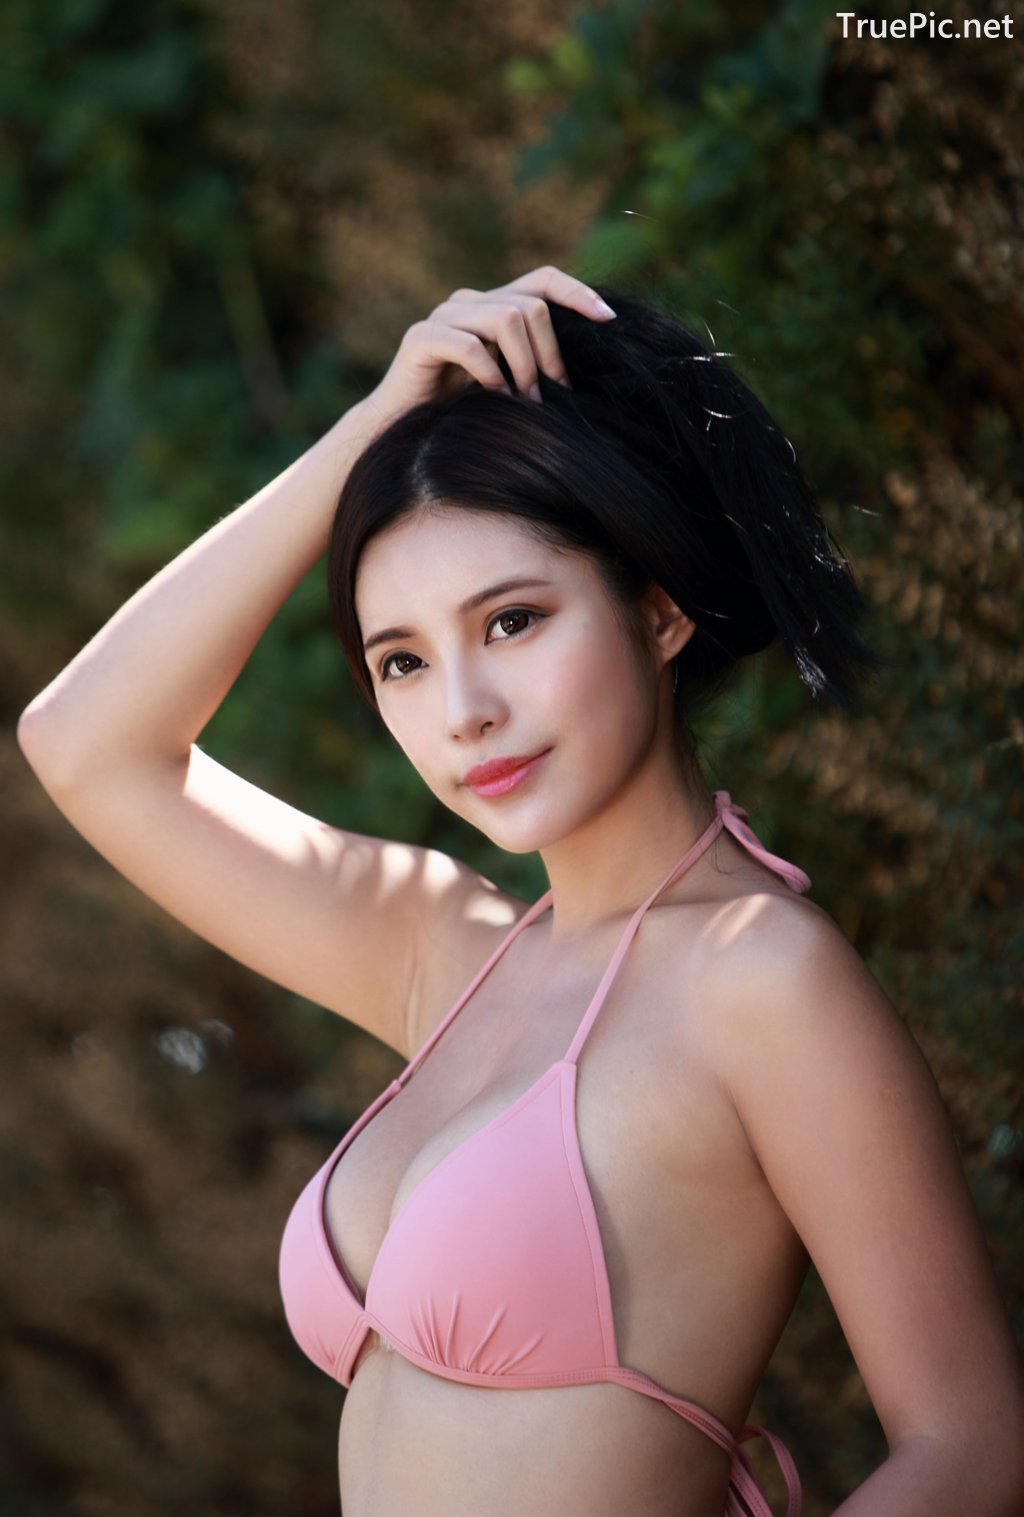 Hot Pink Bikini Top and White Short Pants - Taiwanese Model 莊 舒 潔 (ViVi) .